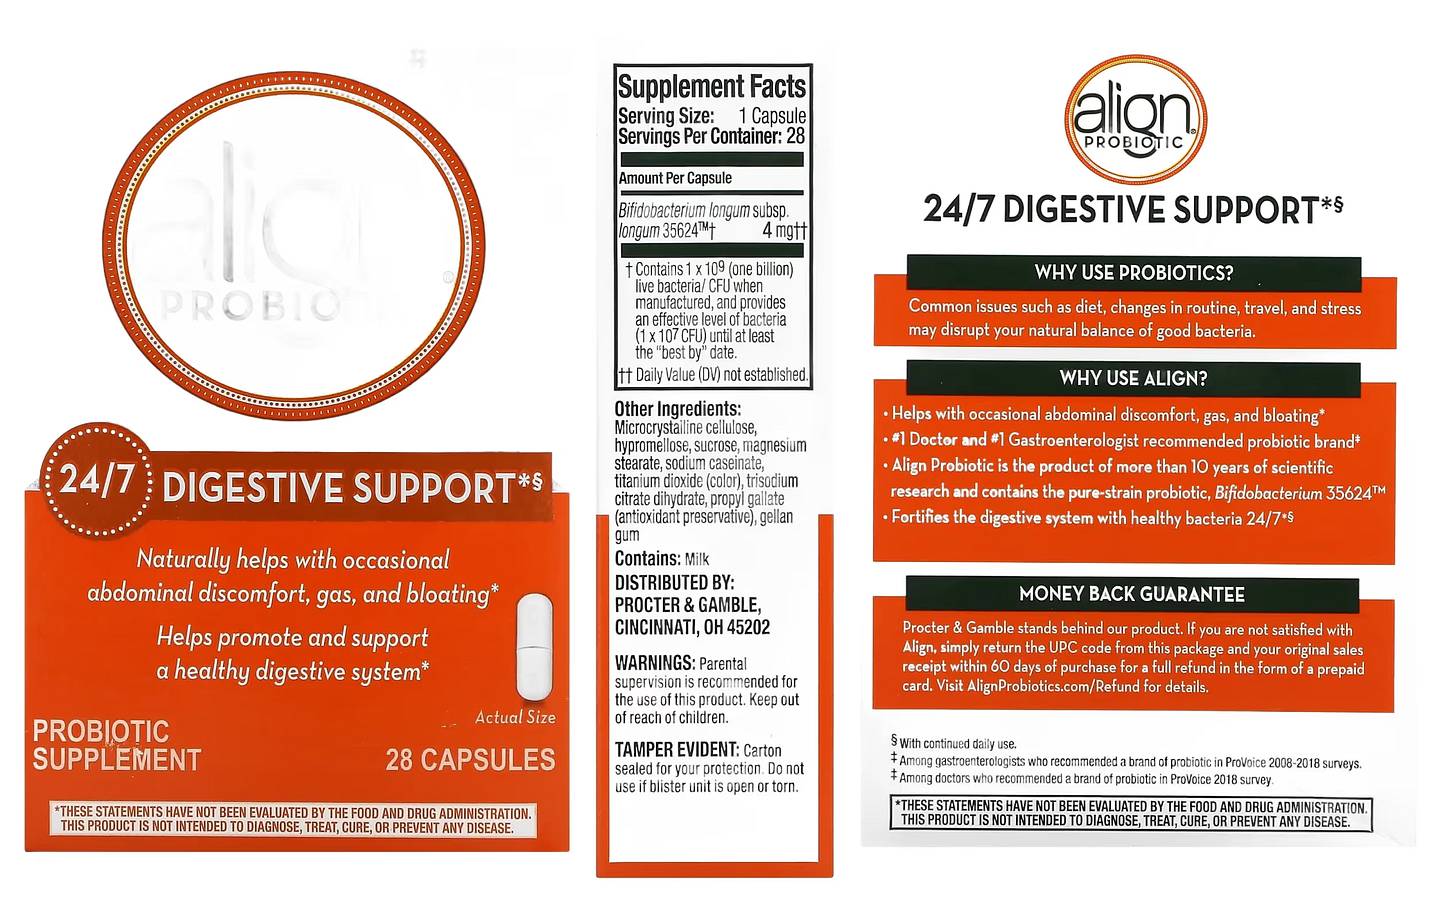 Align Probiotics, 24/7 Digestive Support, Probiotic Supplement packaging